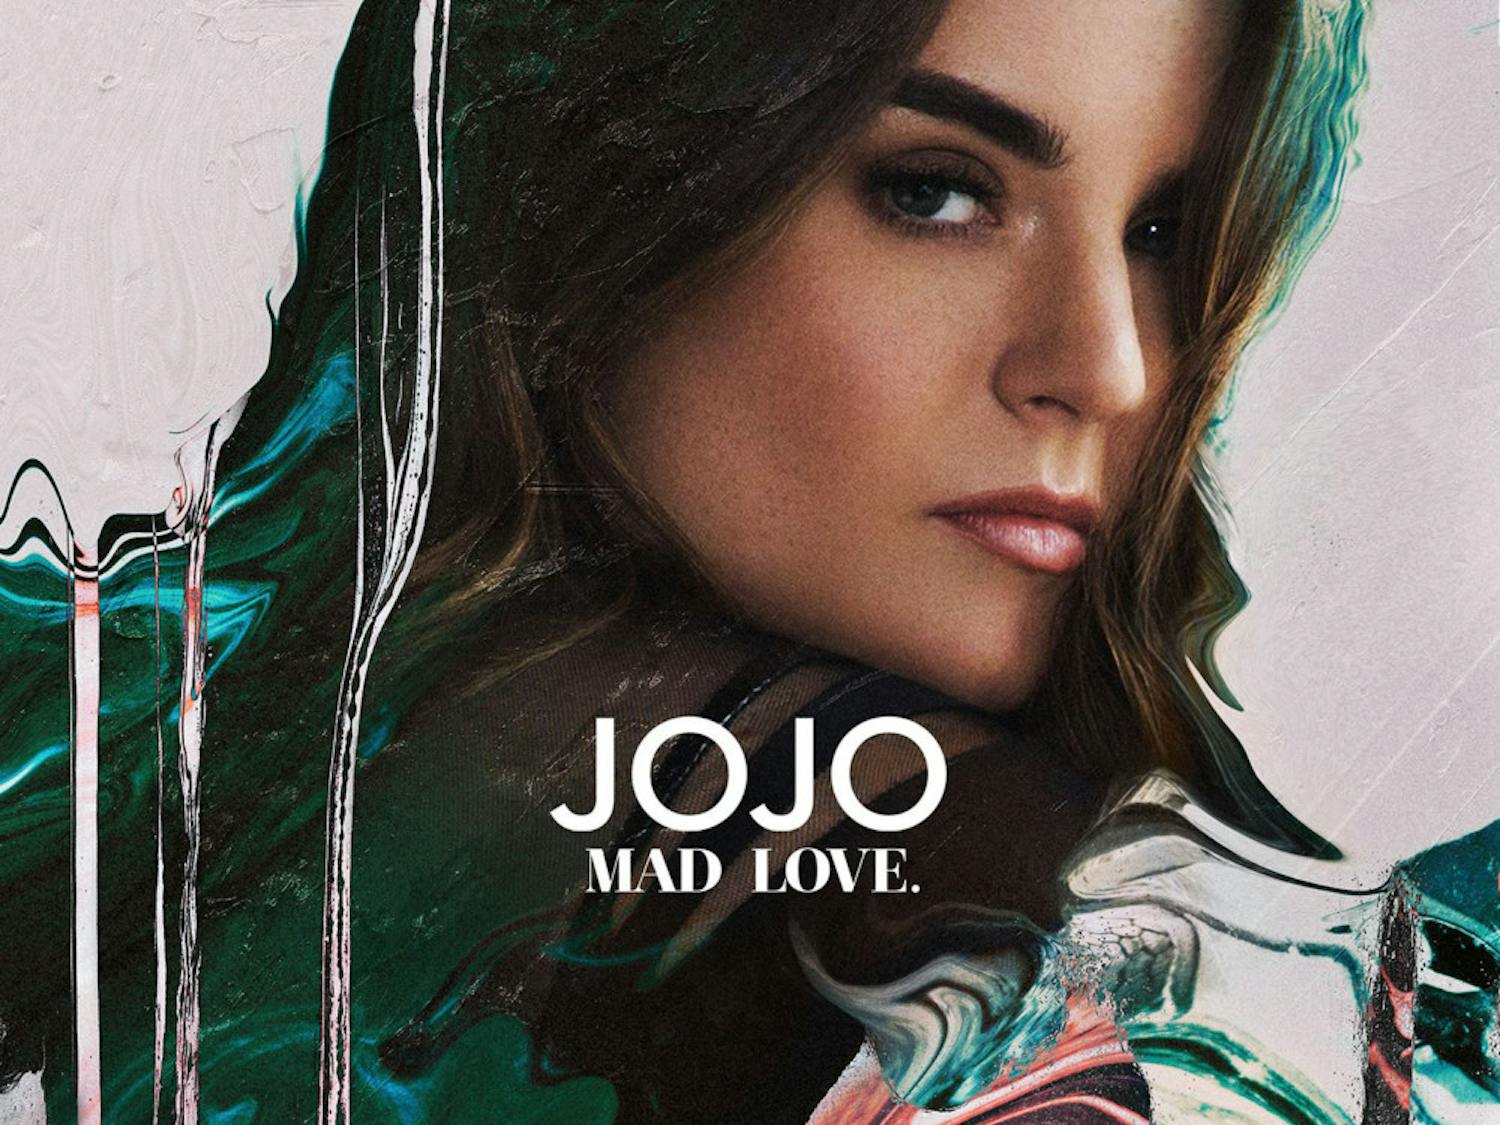 JoJo-Mad-Love.-2016-2480x2480